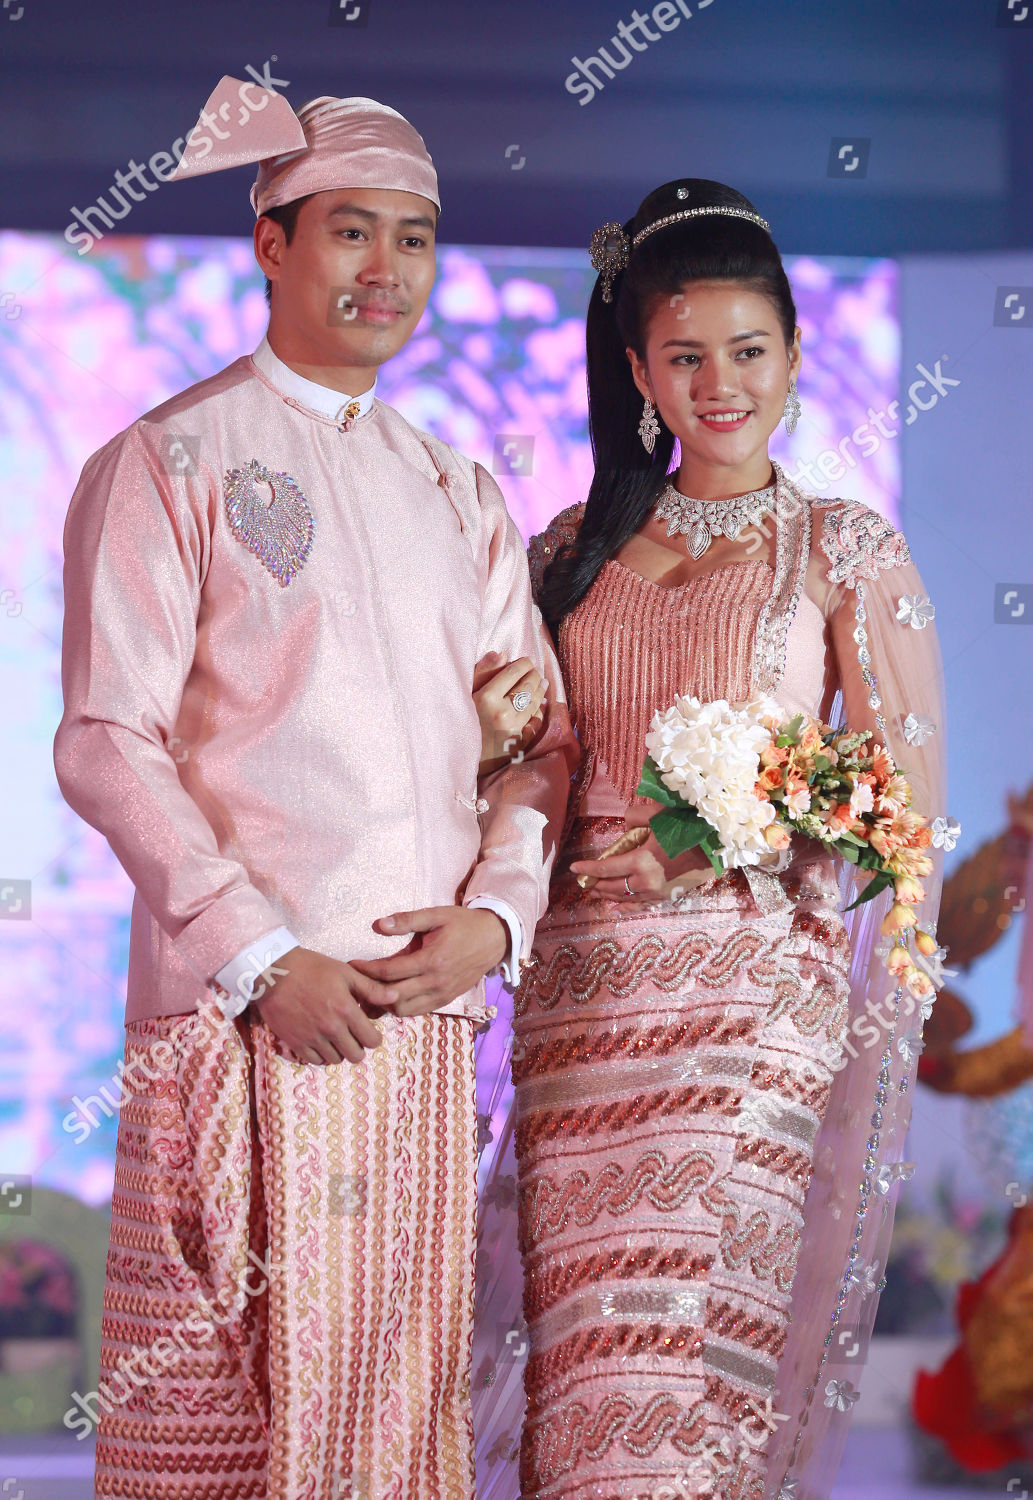 Myanmar Wedding : Modern Myanmar Wedding Fashion - All Things Myanmar ...